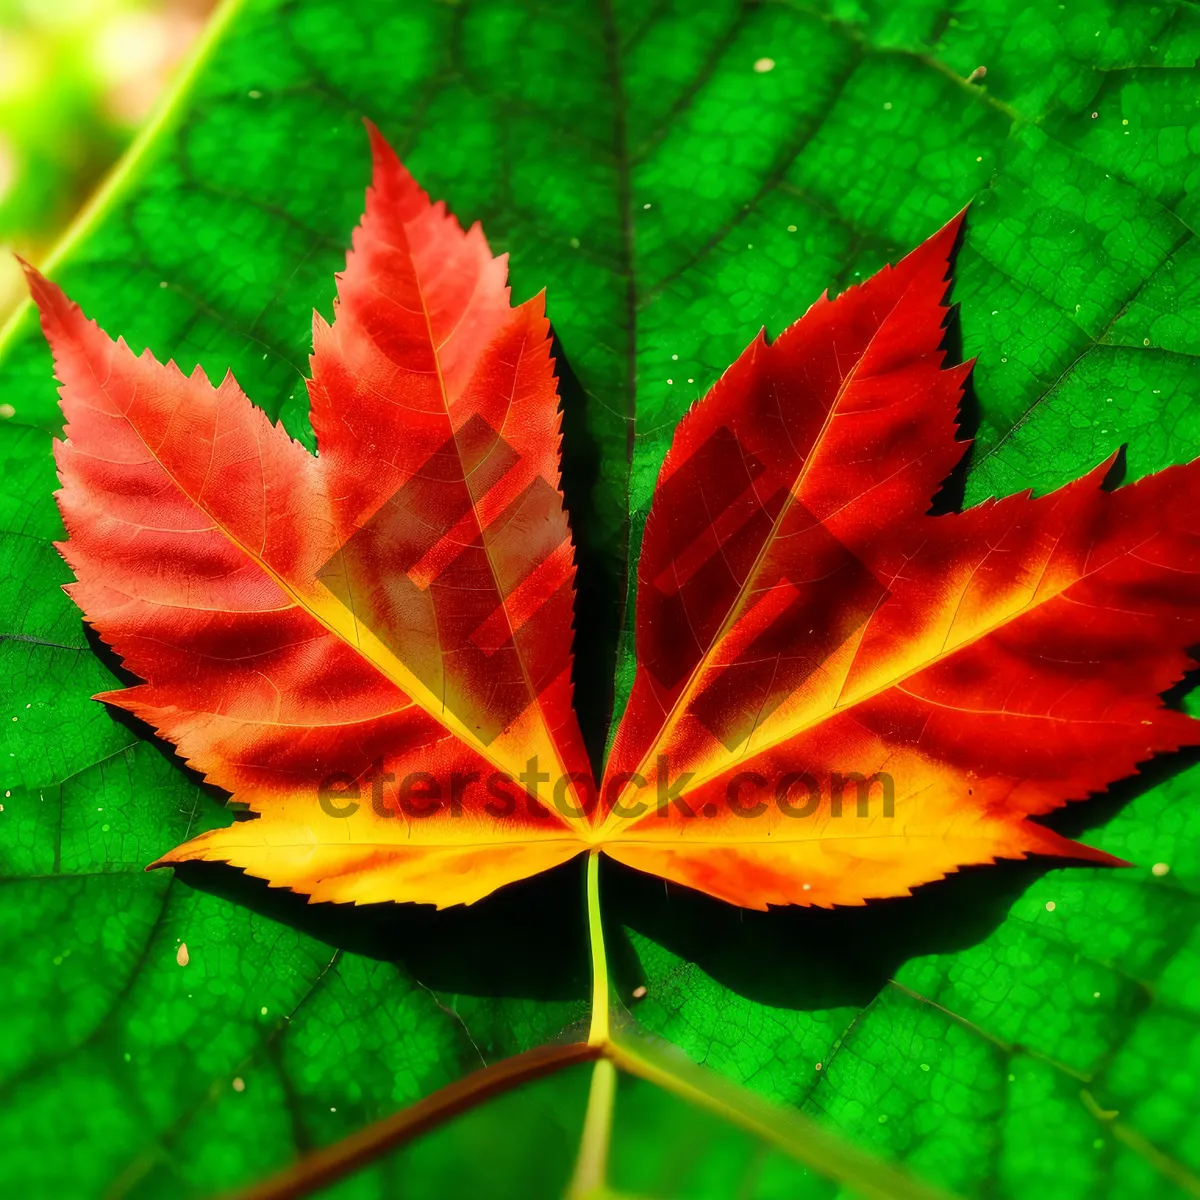 Picture of Vibrant Autumn Foliage: A Burst of Color